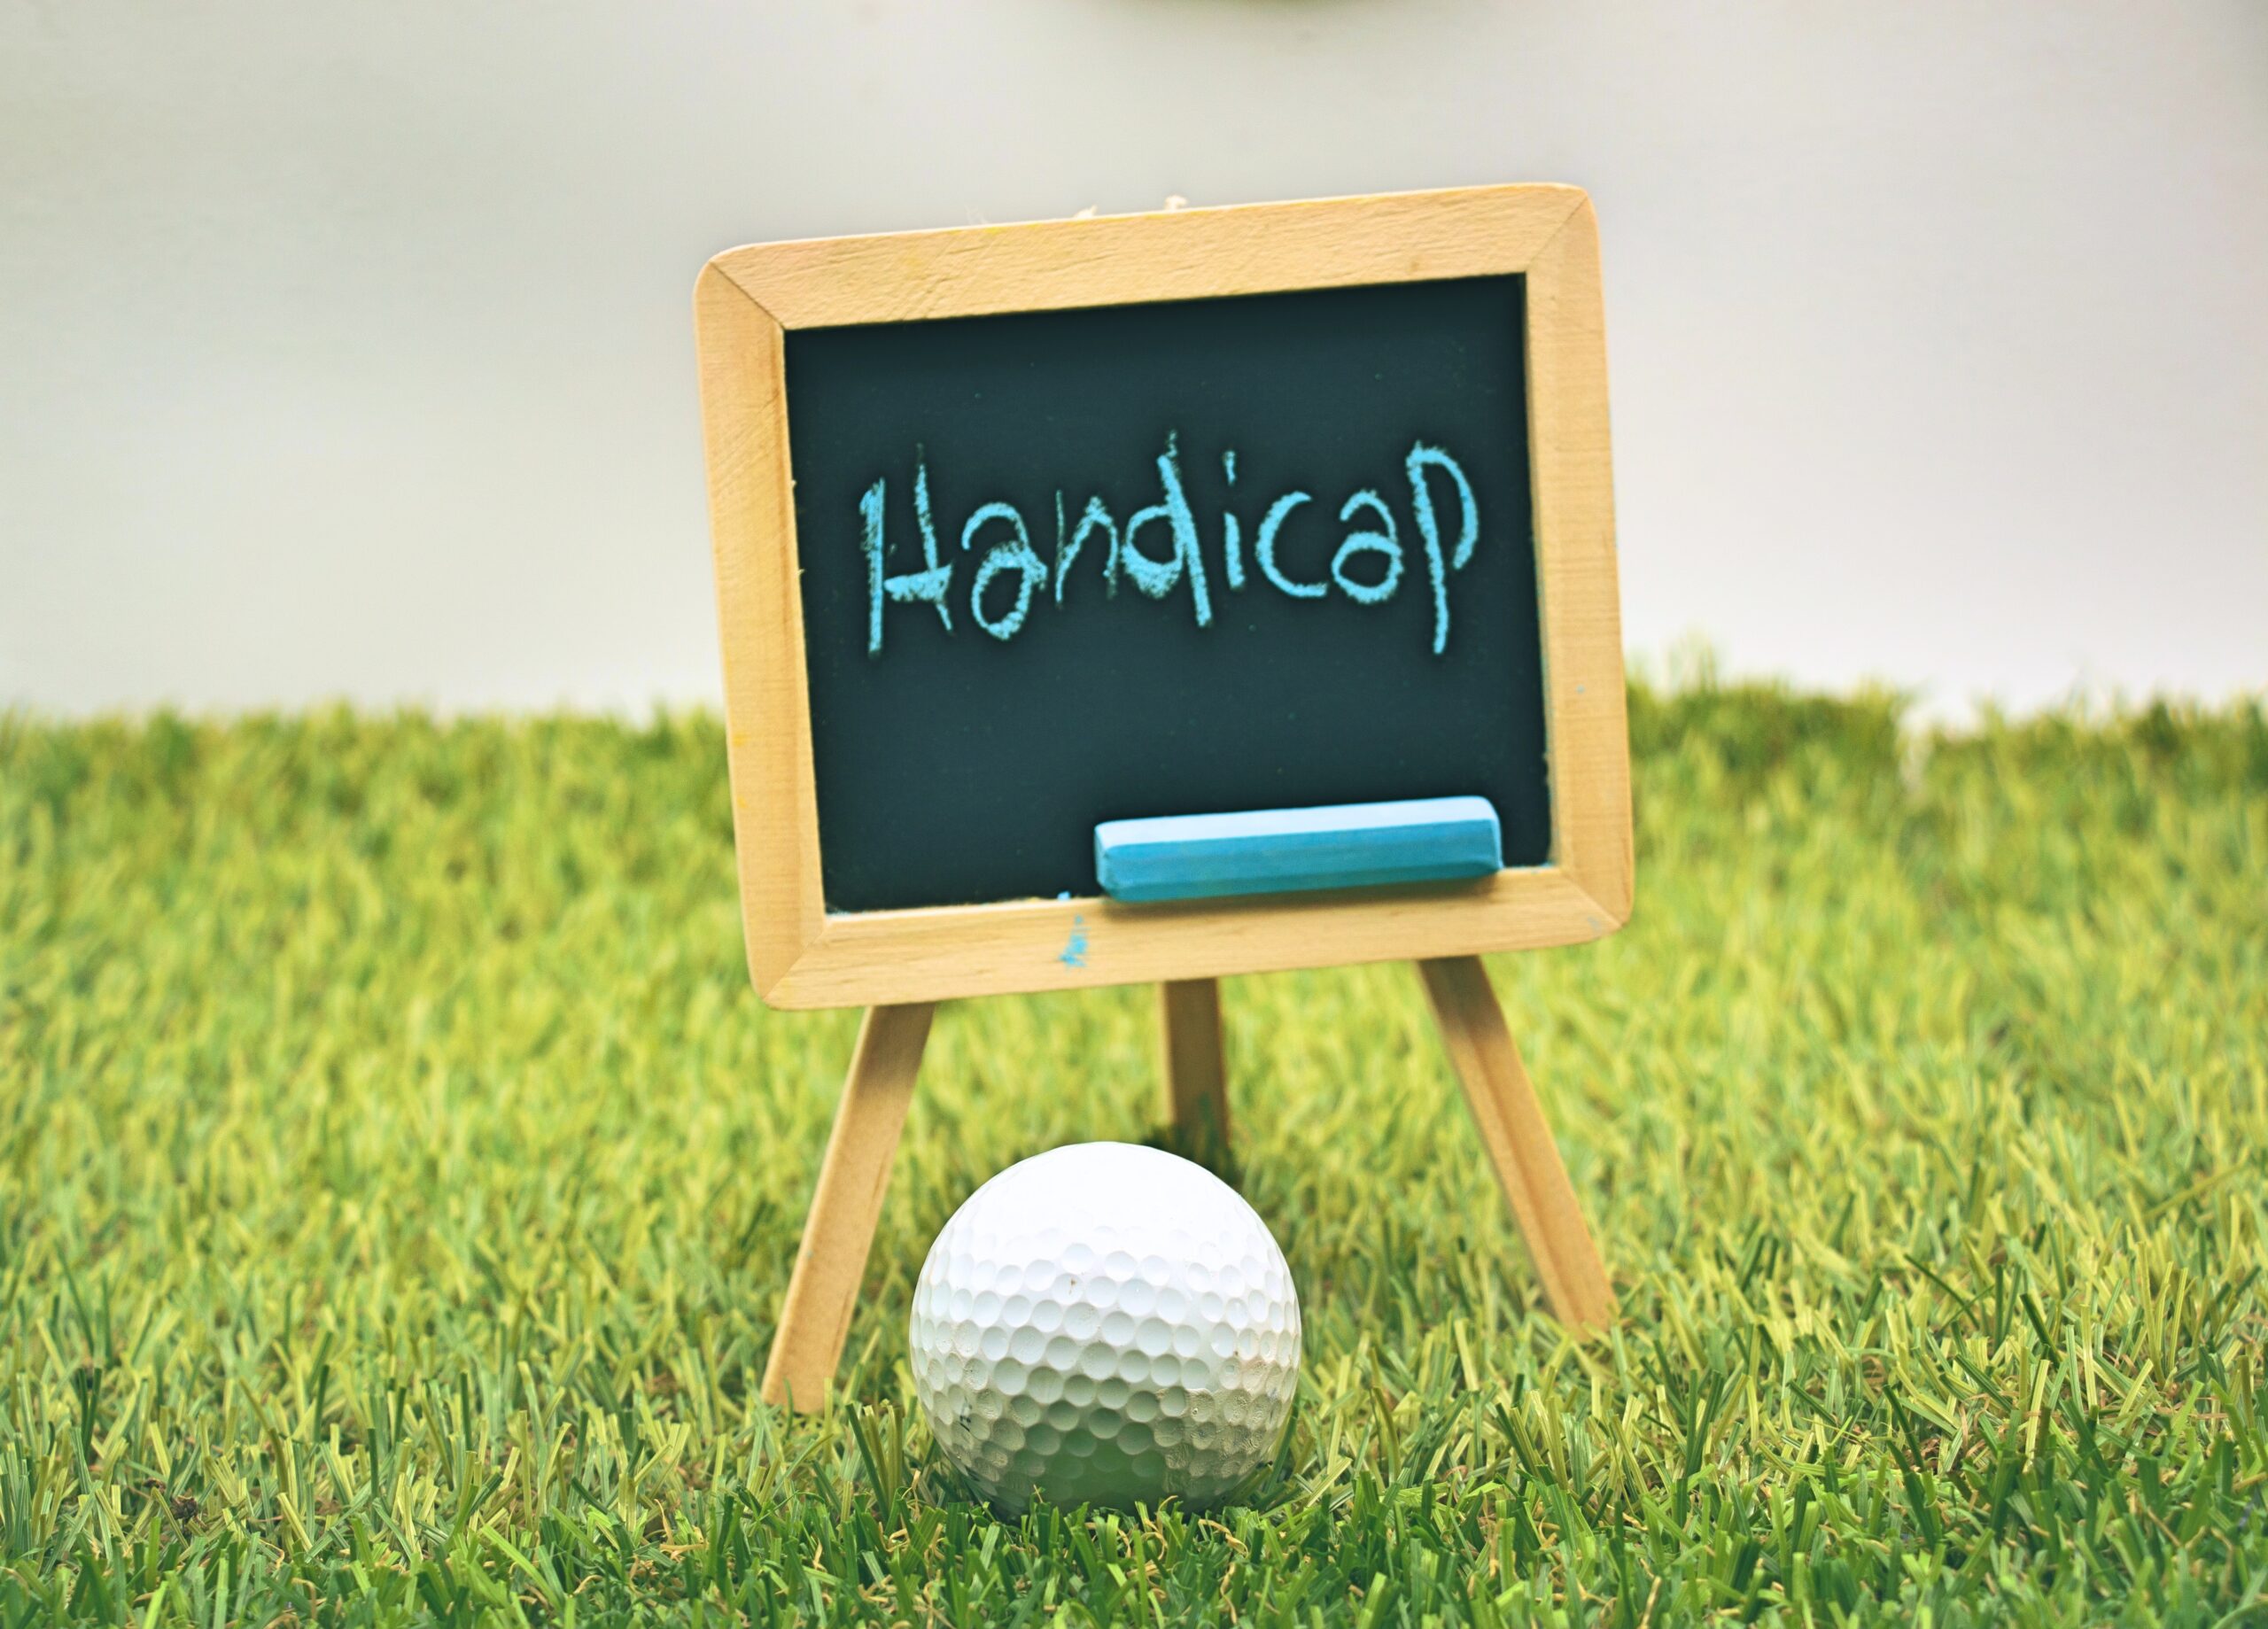 Golf,Handicap,Wording,On,Blackboard,,,Idea,For,Teaching,Golf